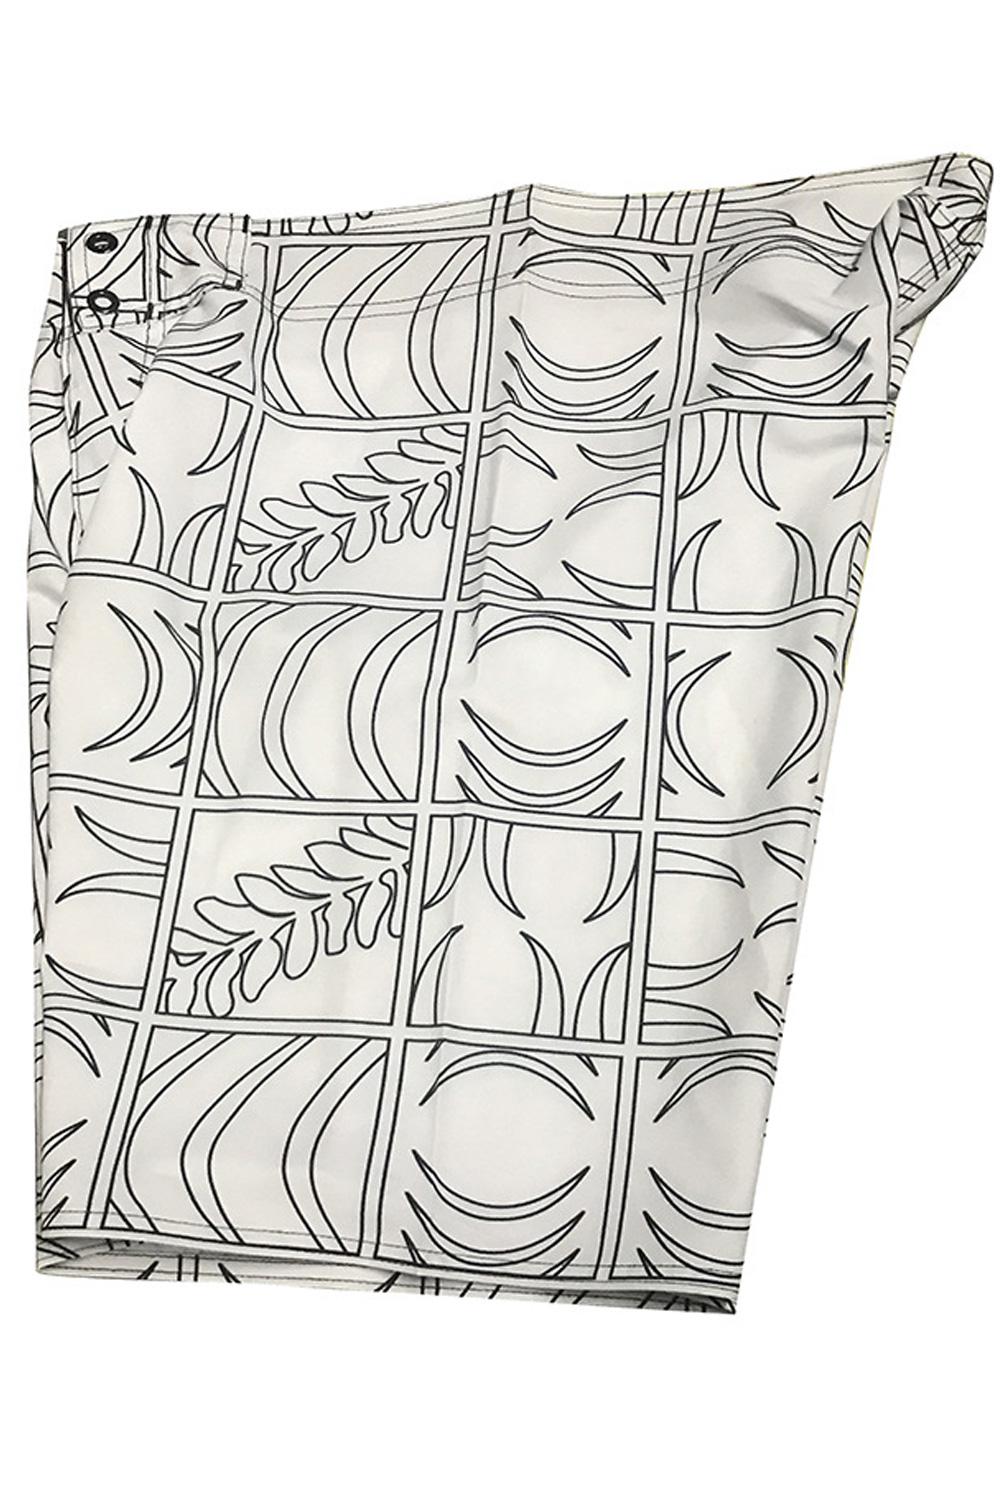 KettyMore Men Magnificent Printed Pattern Loose Draw cord Stylish Swimwear Short